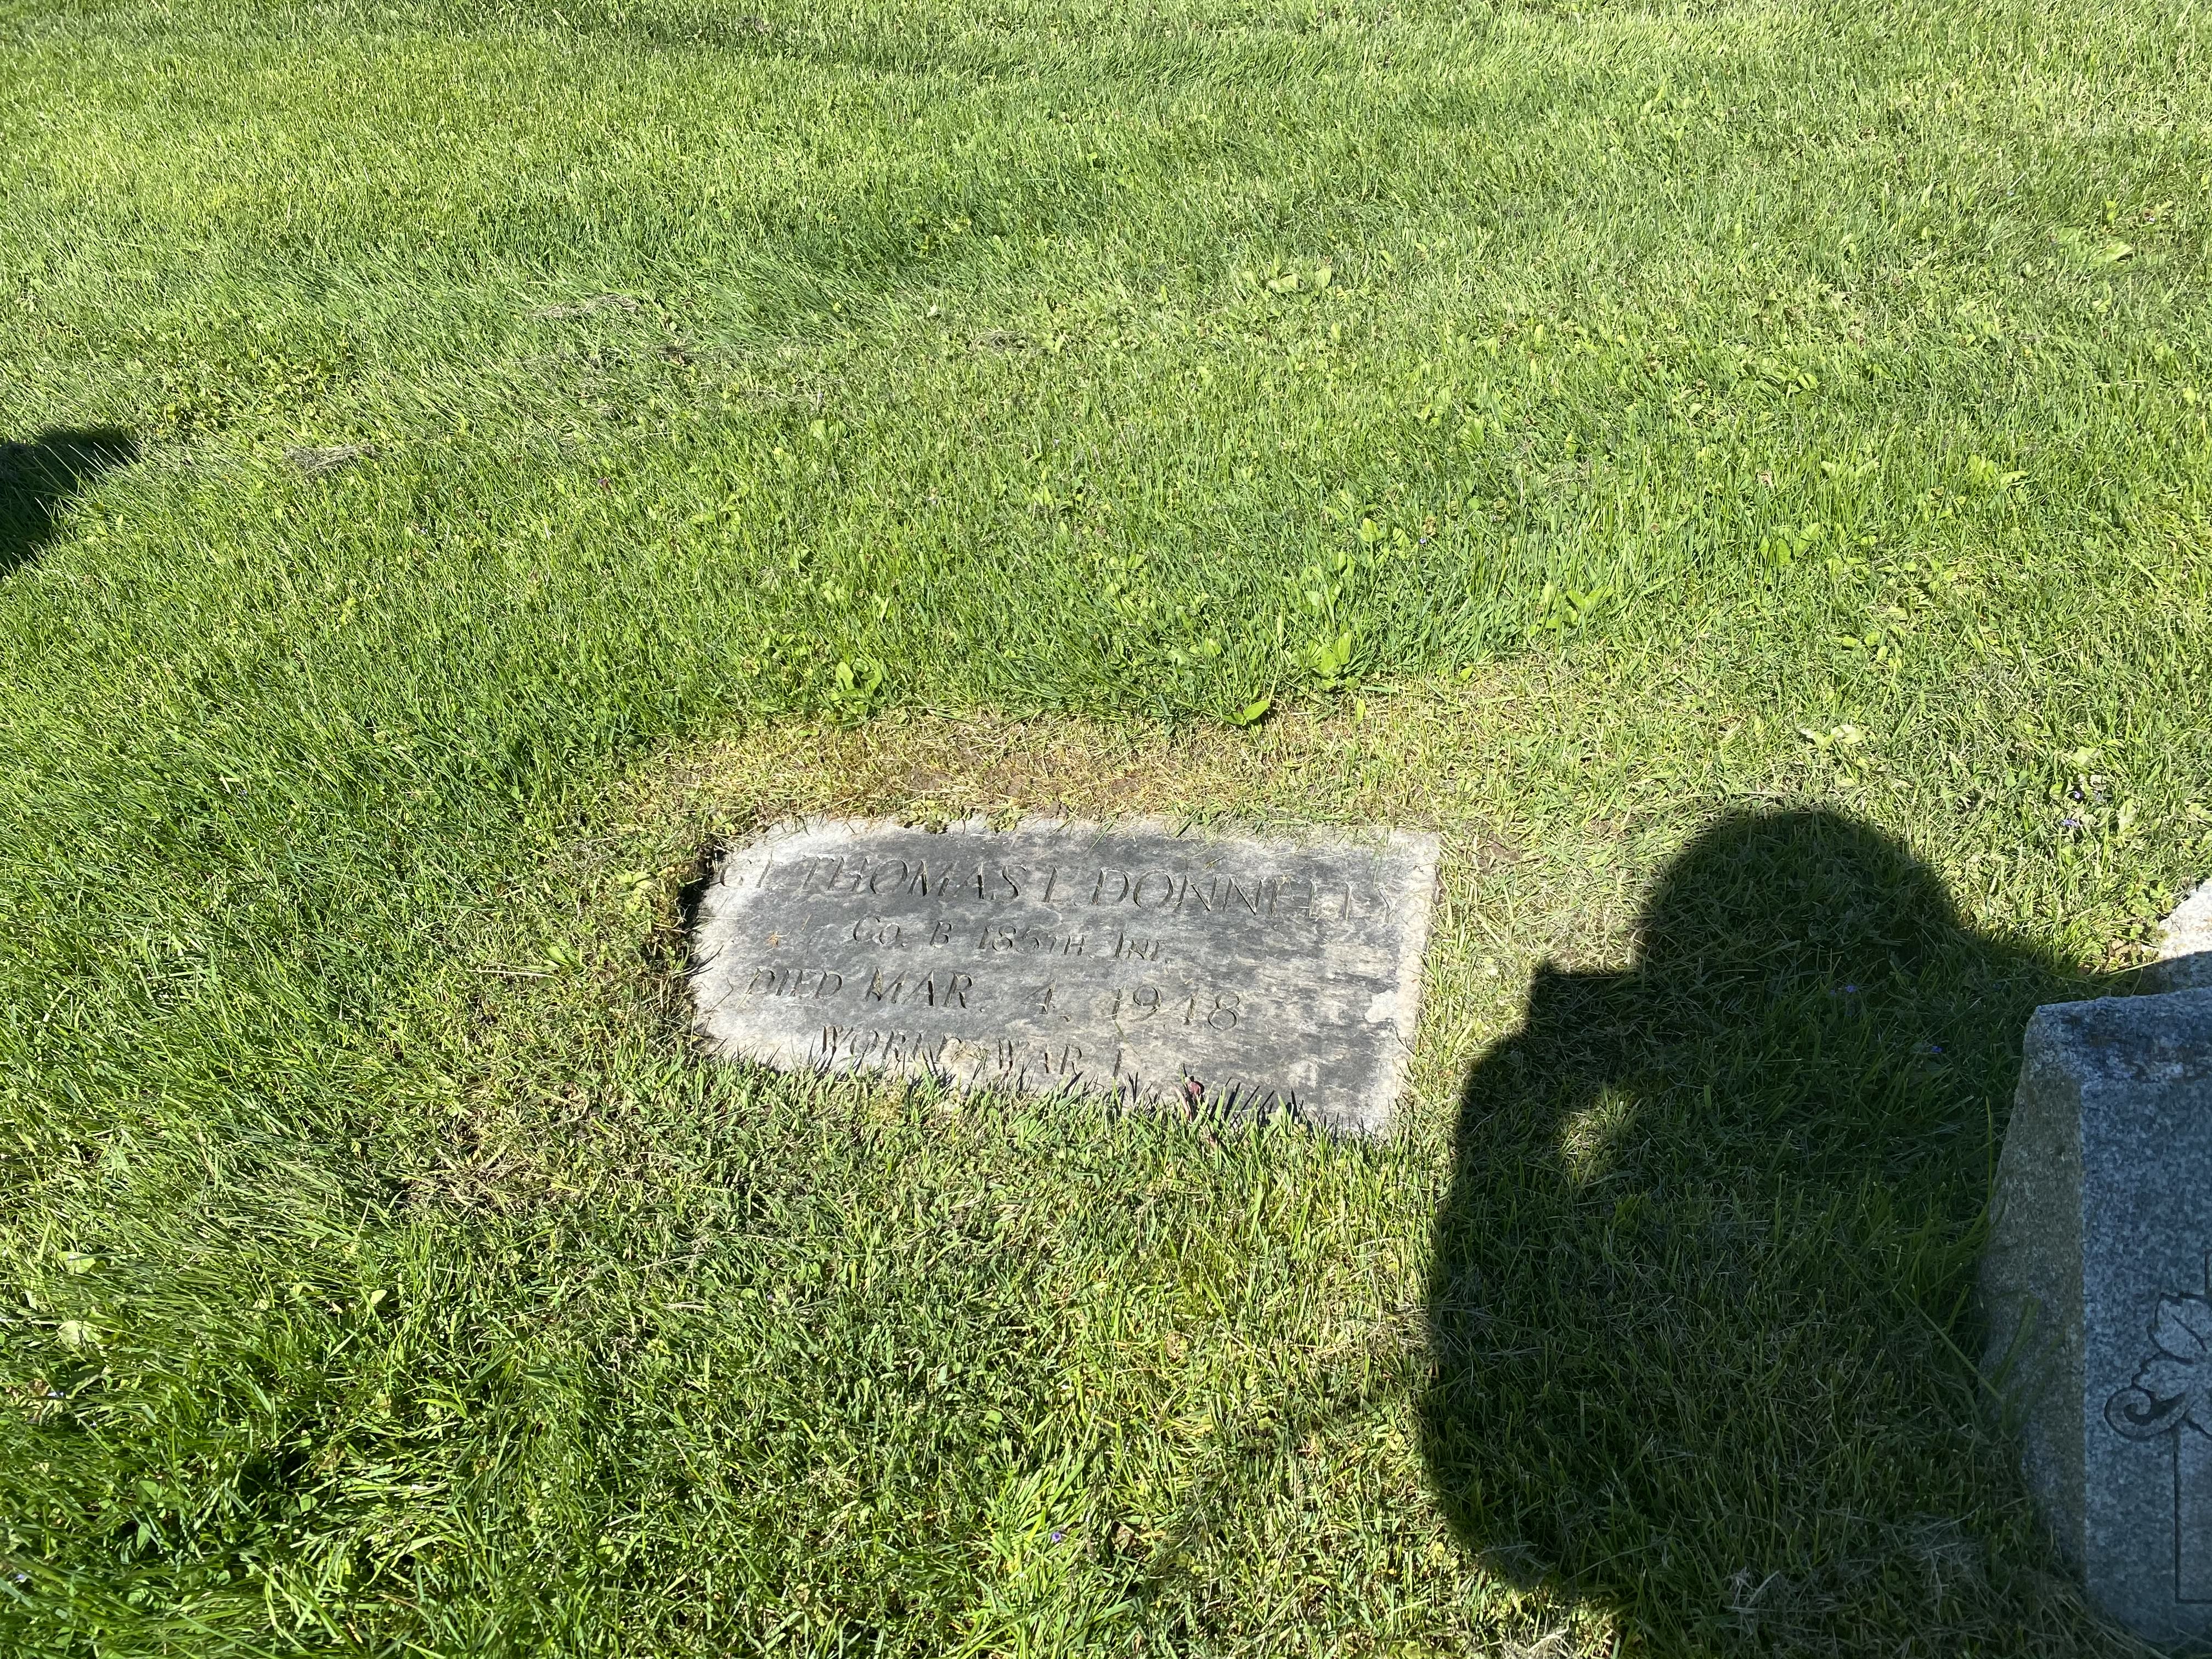 Eugenie's Husband's Grave